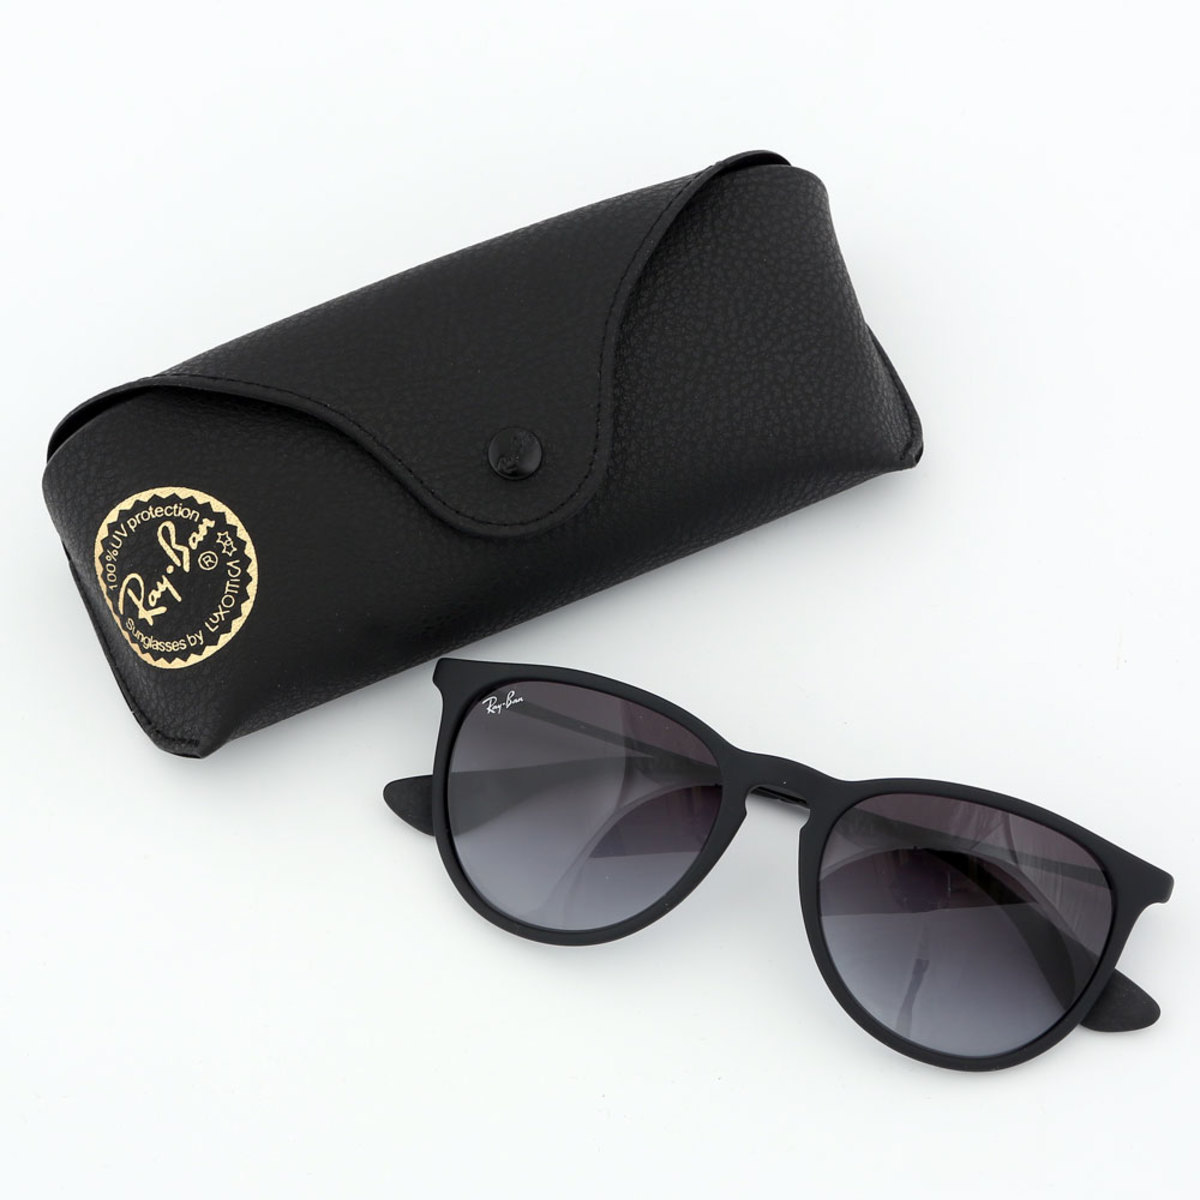 Ray-Ban Erika Black Sunglasses with Grey Lenses, RB4171 622/8G